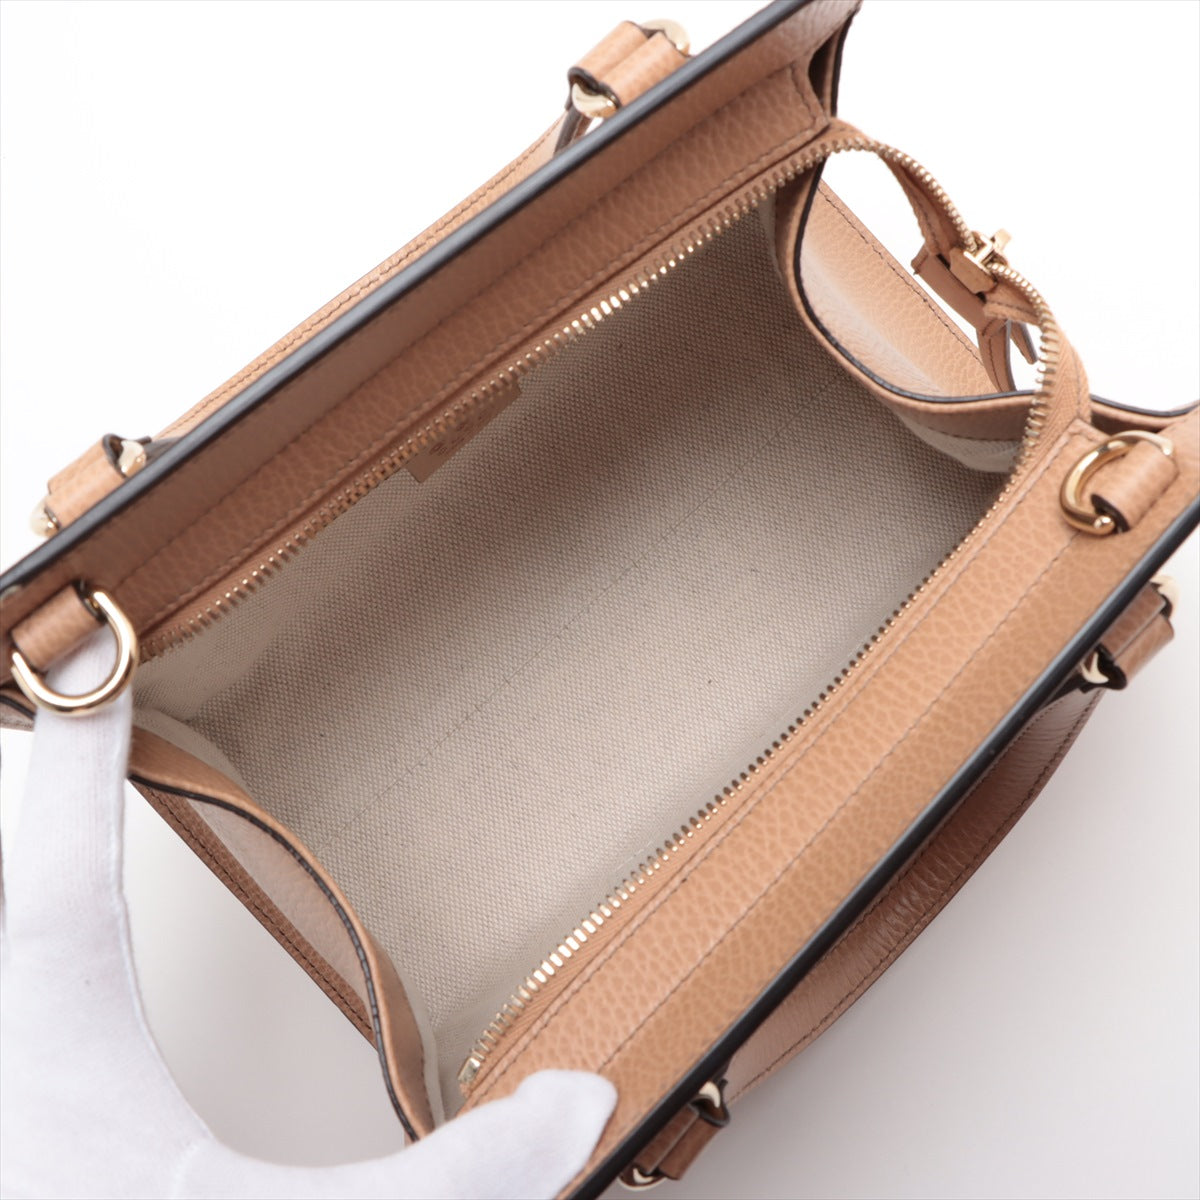 Gucci Soho Interlocg G Leather 2WAY Handbag Beige 607722